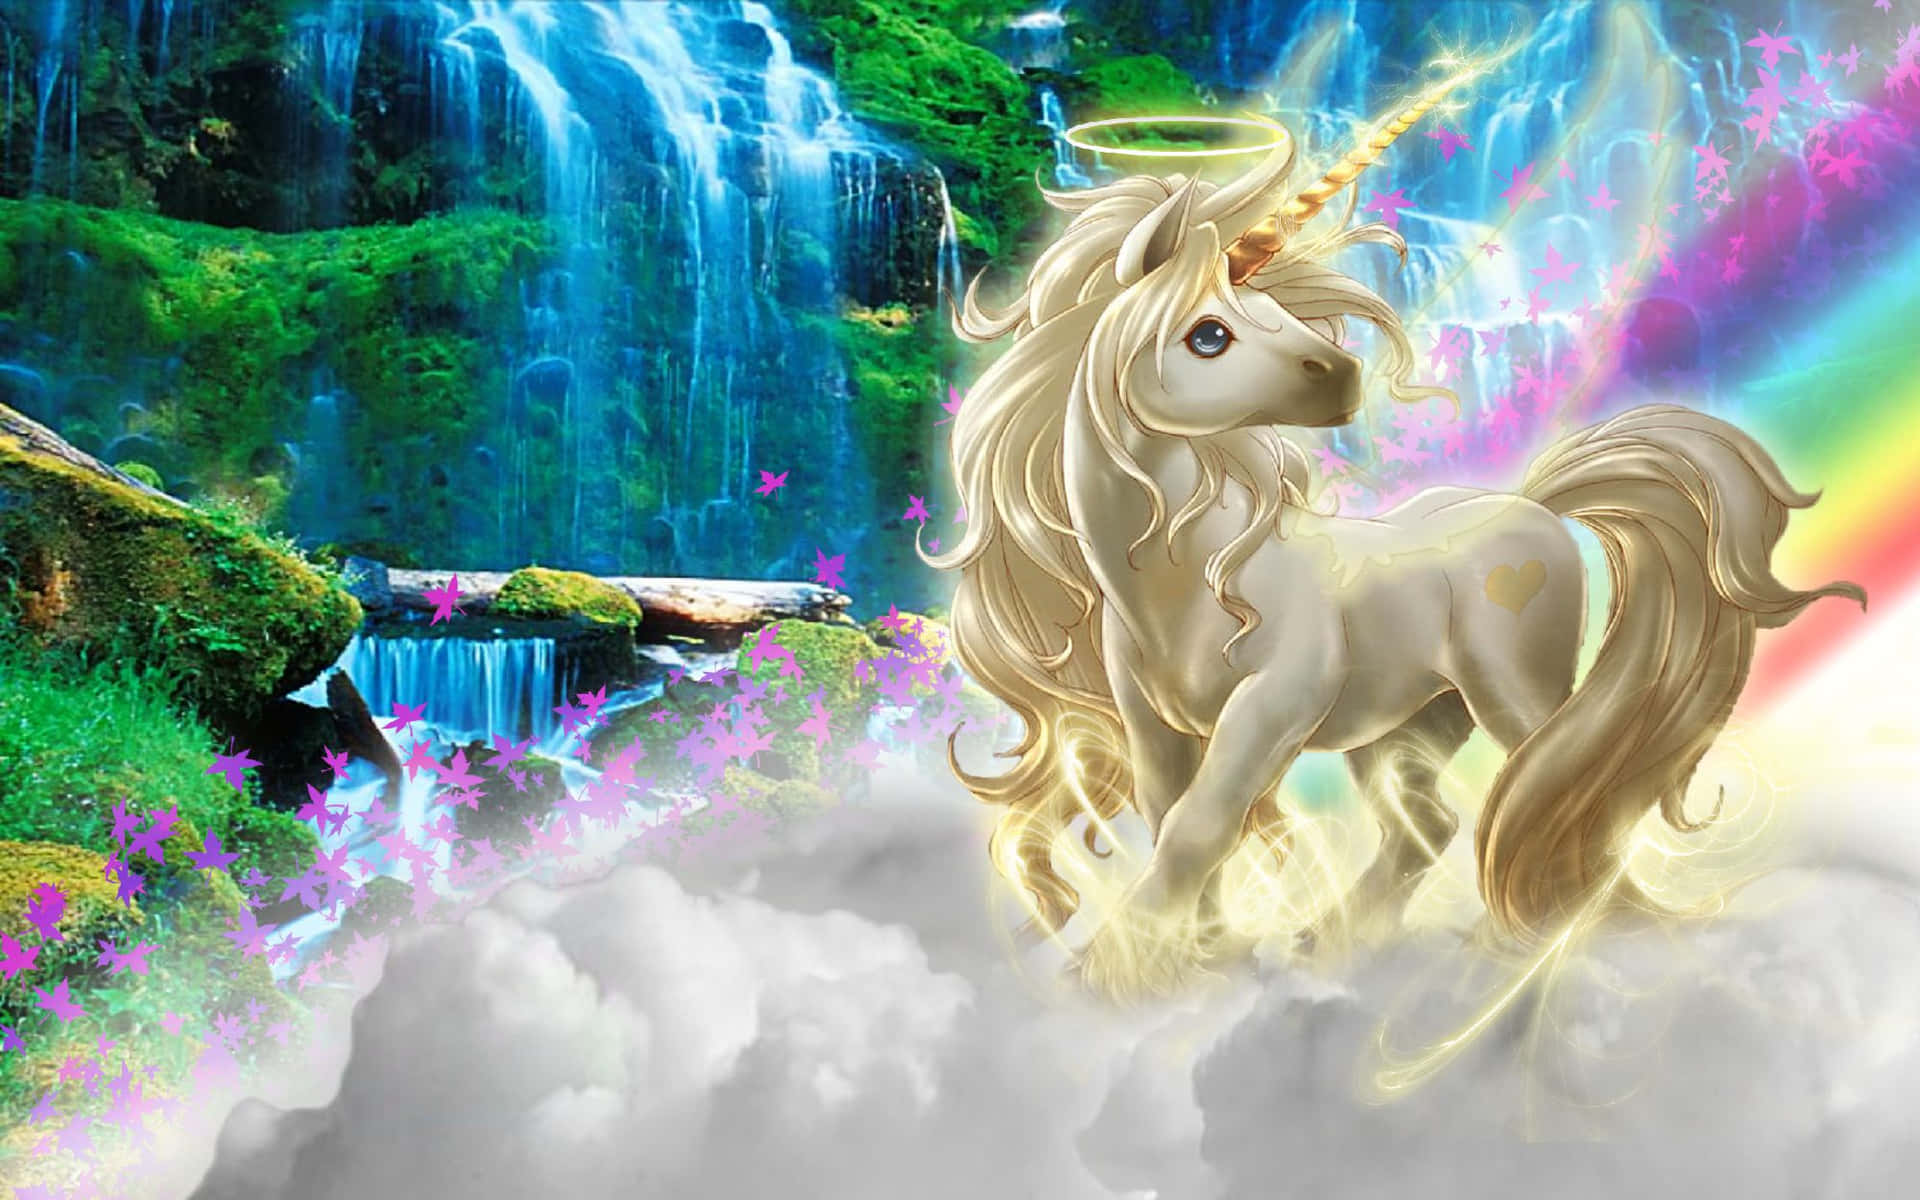 Imagine a mystical world of Unicorns and Rainbows